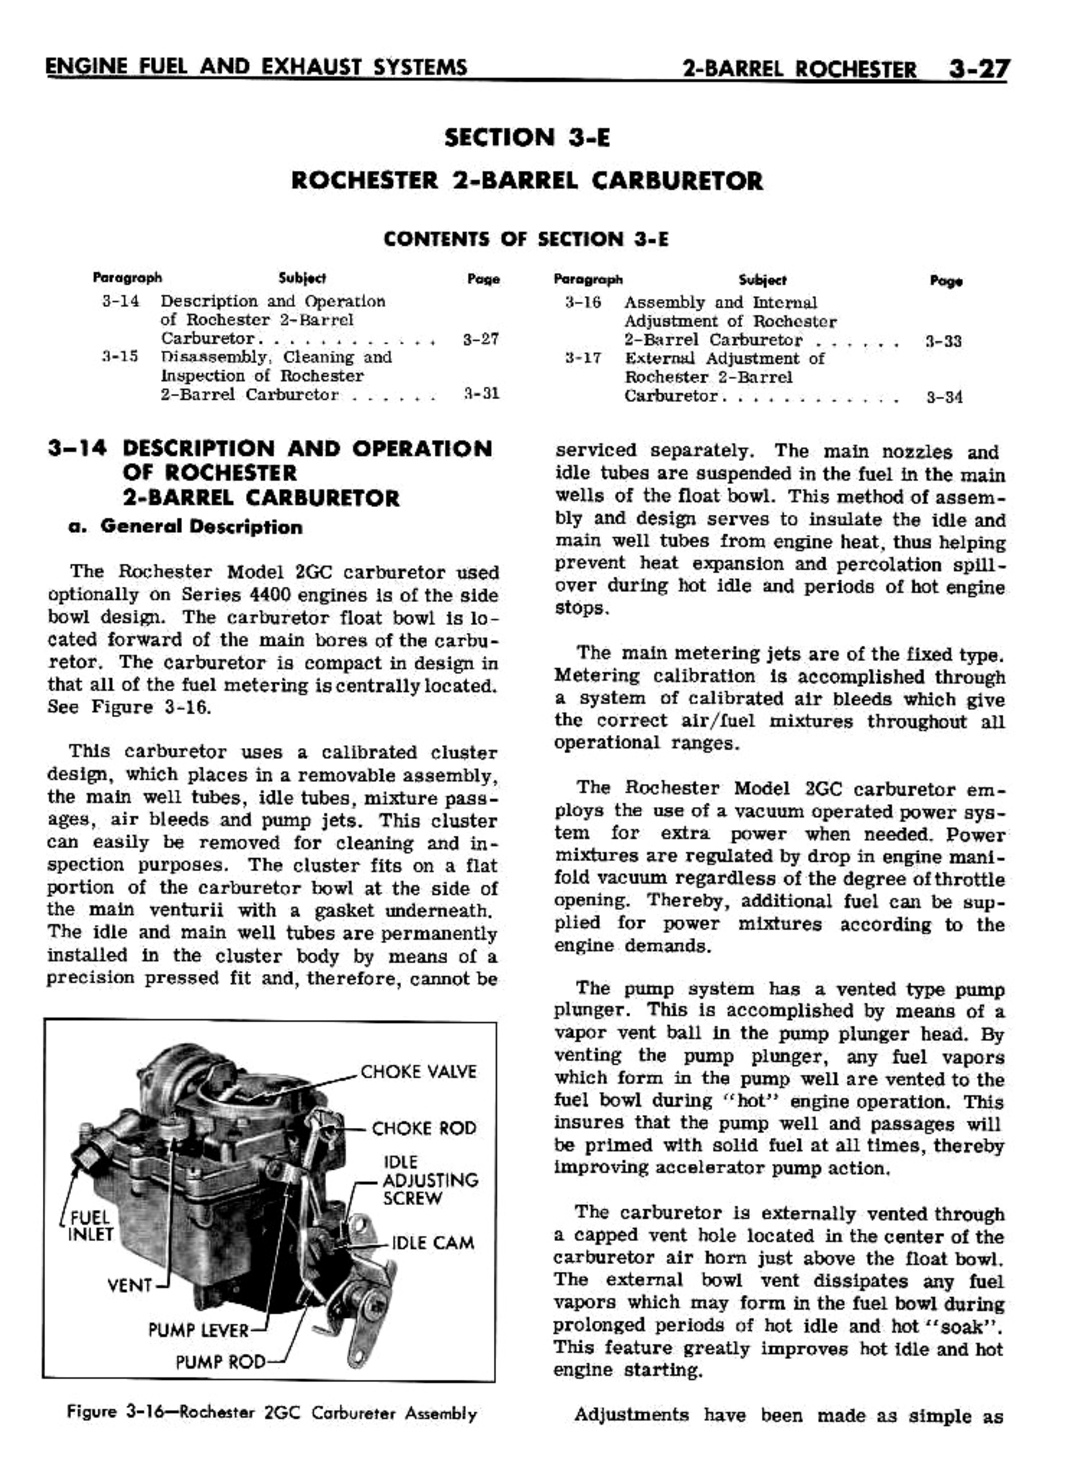 n_04 1961 Buick Shop Manual - Engine Fuel & Exhaust-027-027.jpg